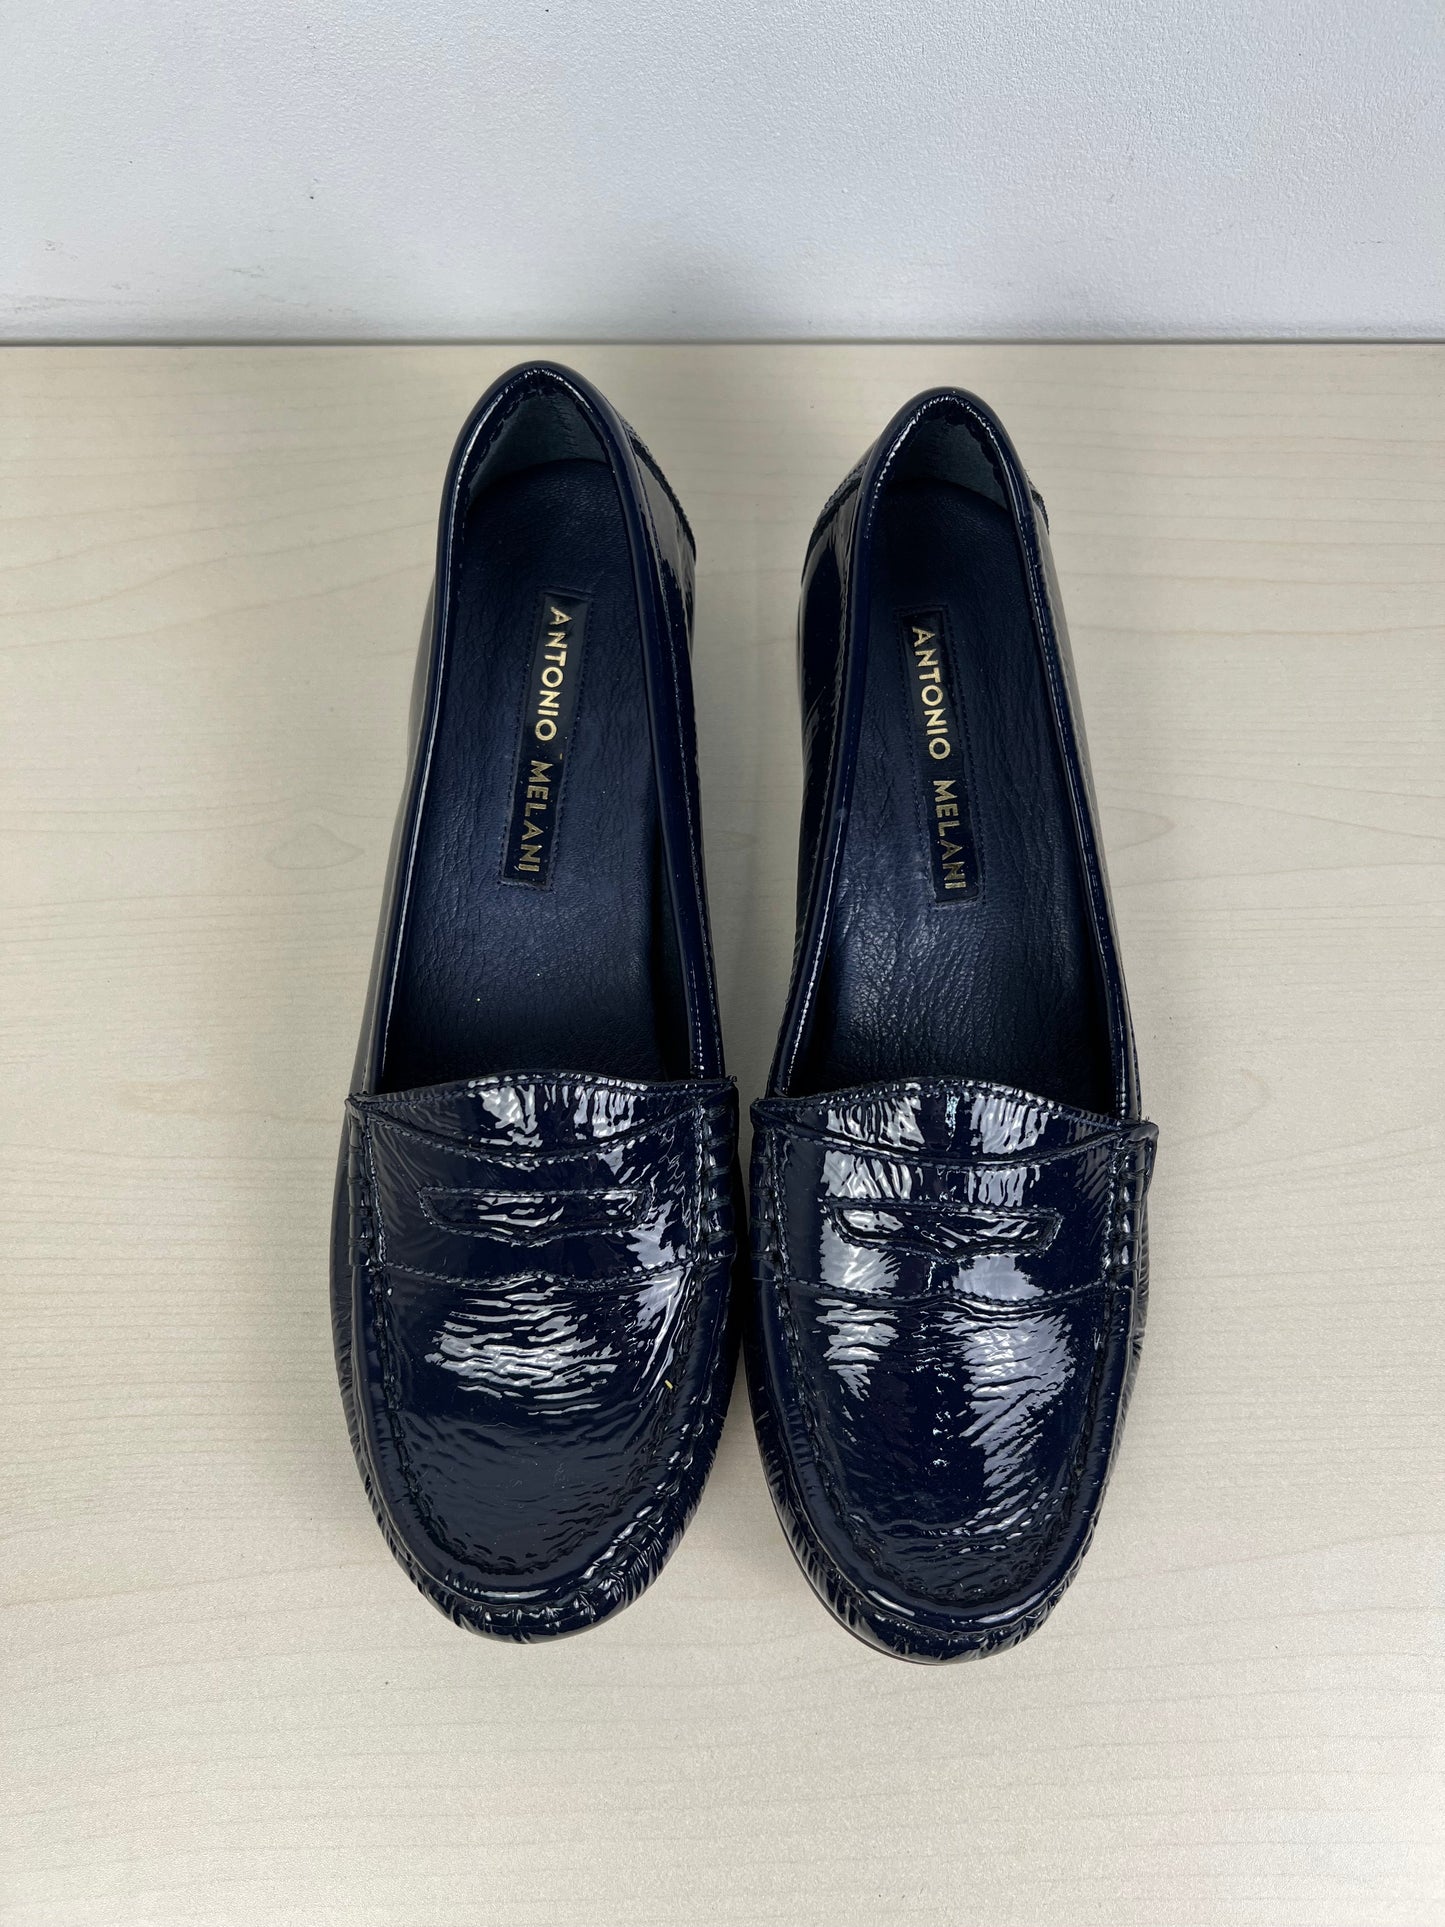 Shoes Flats By Antonio Melani  Size: 7.5